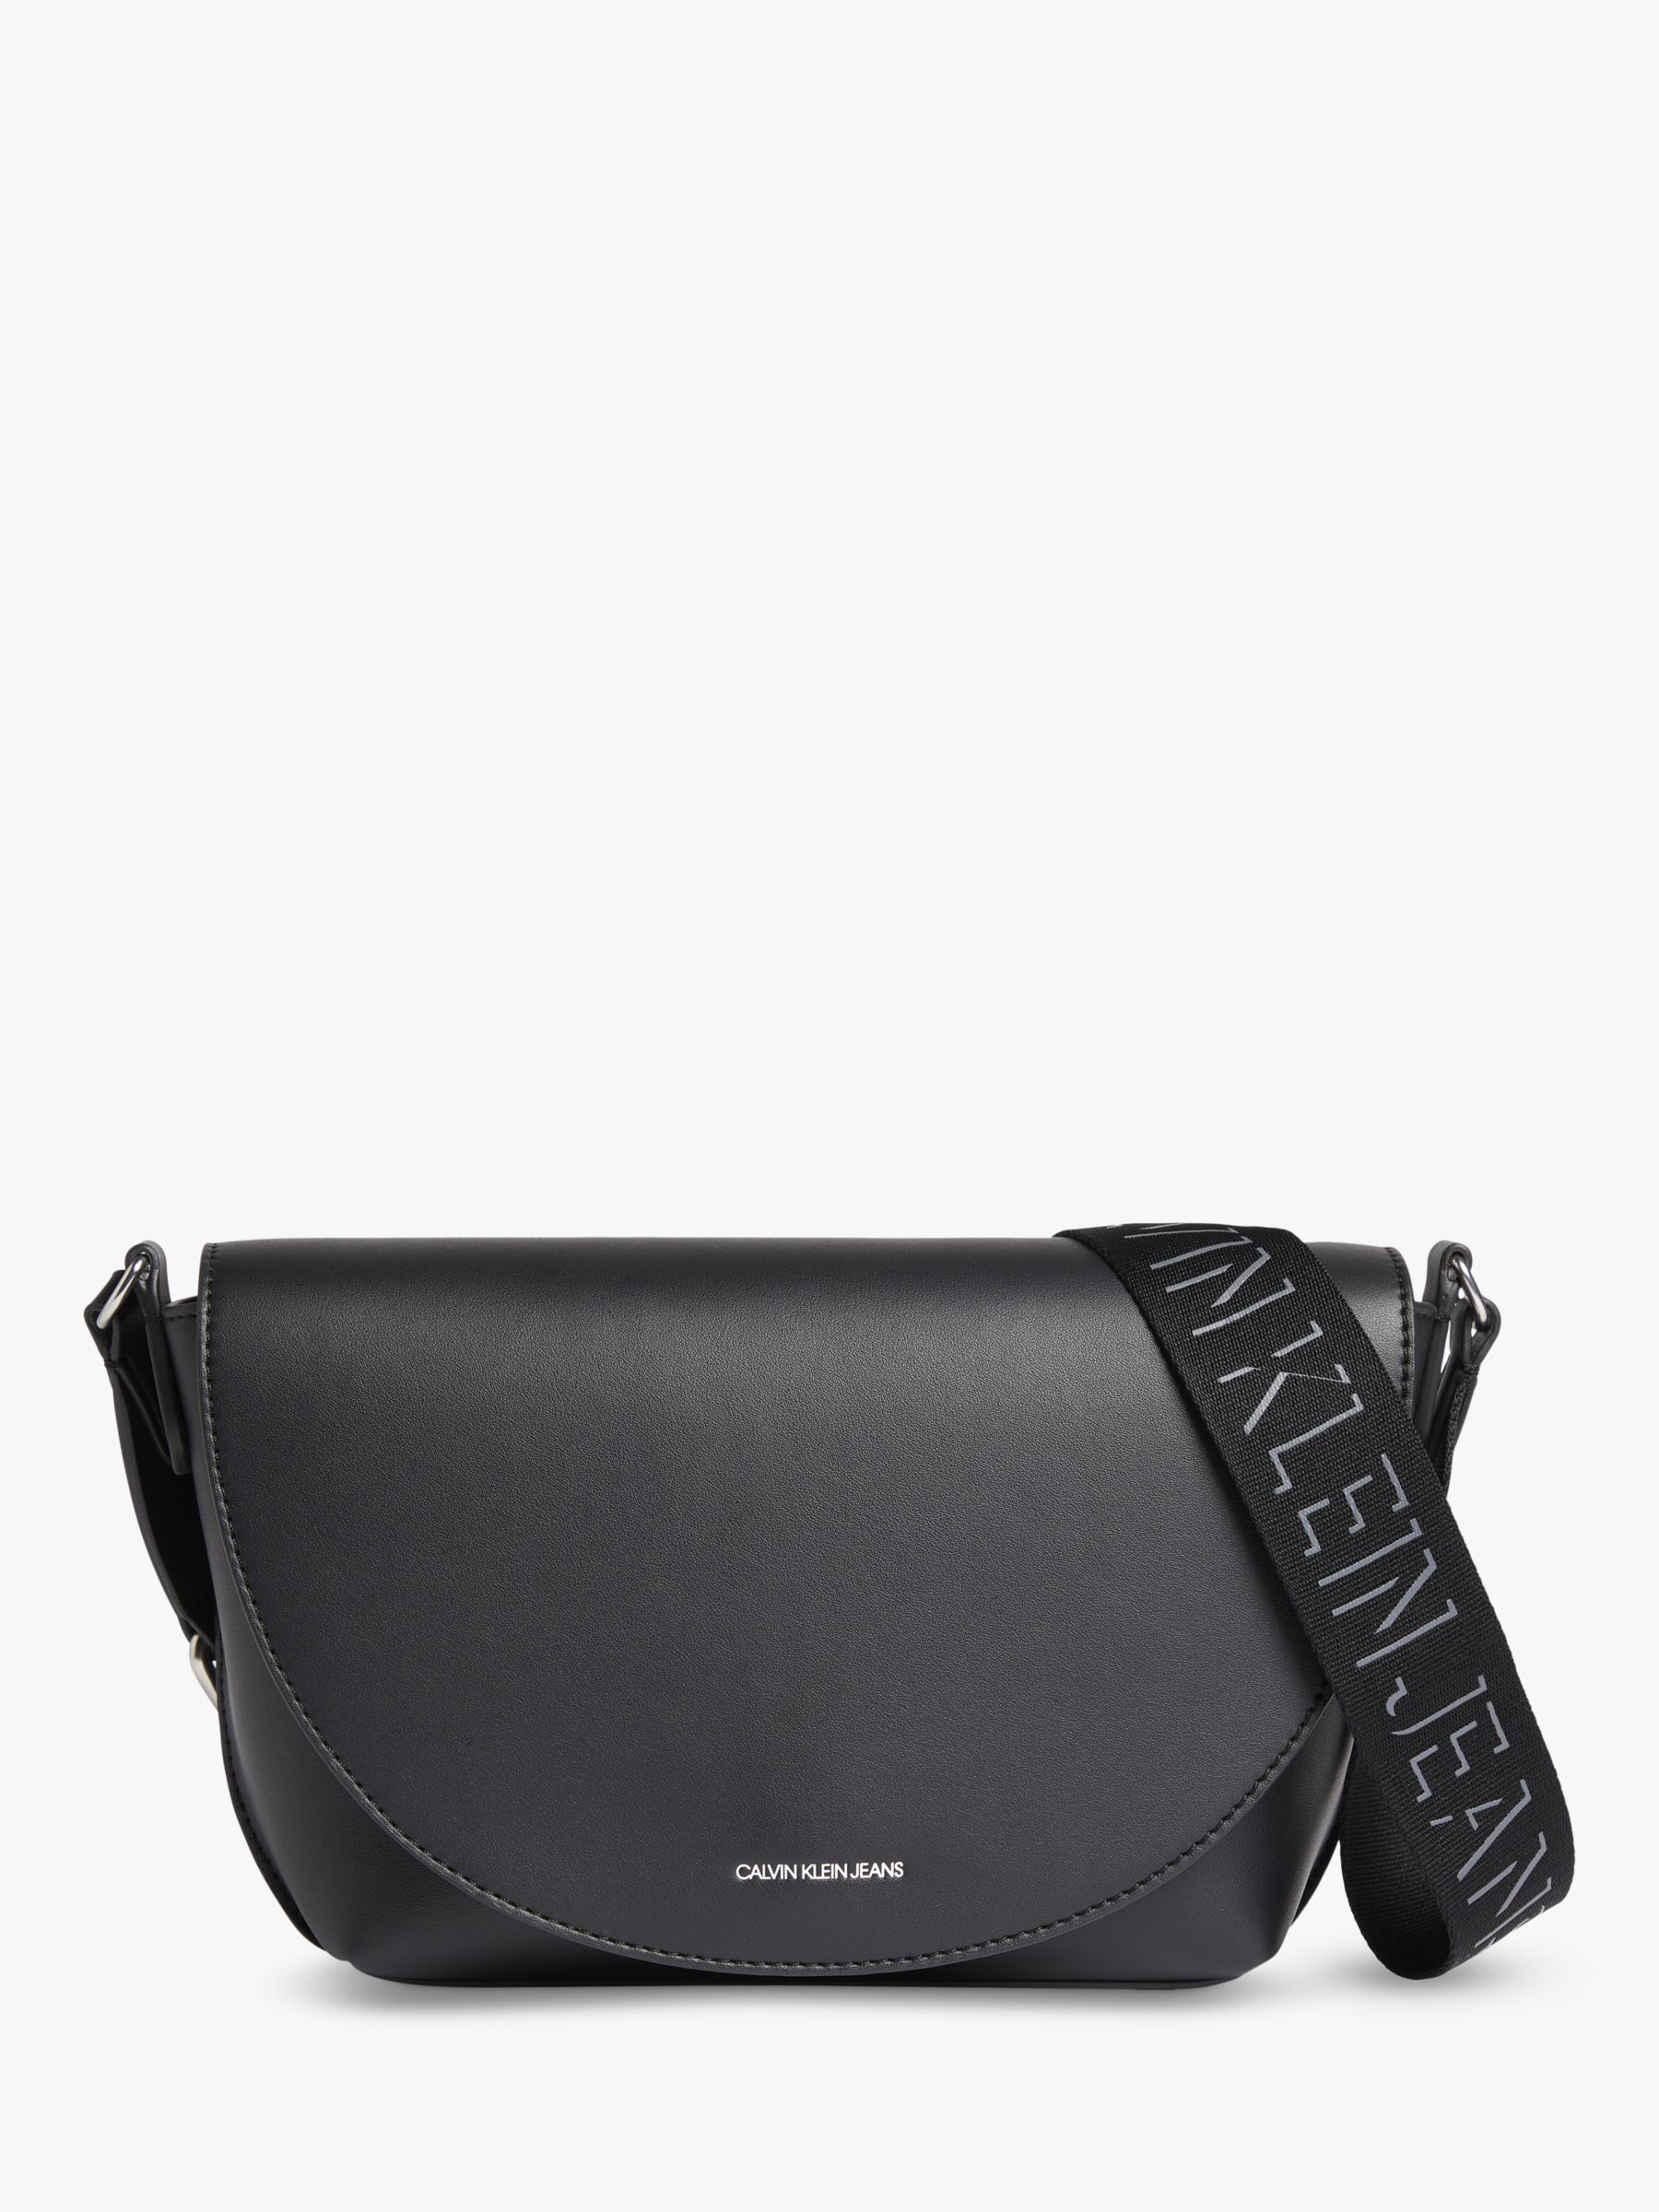 Calvin Klein Trapezoid Cross Body Bag, Black at John Lewis & Partners